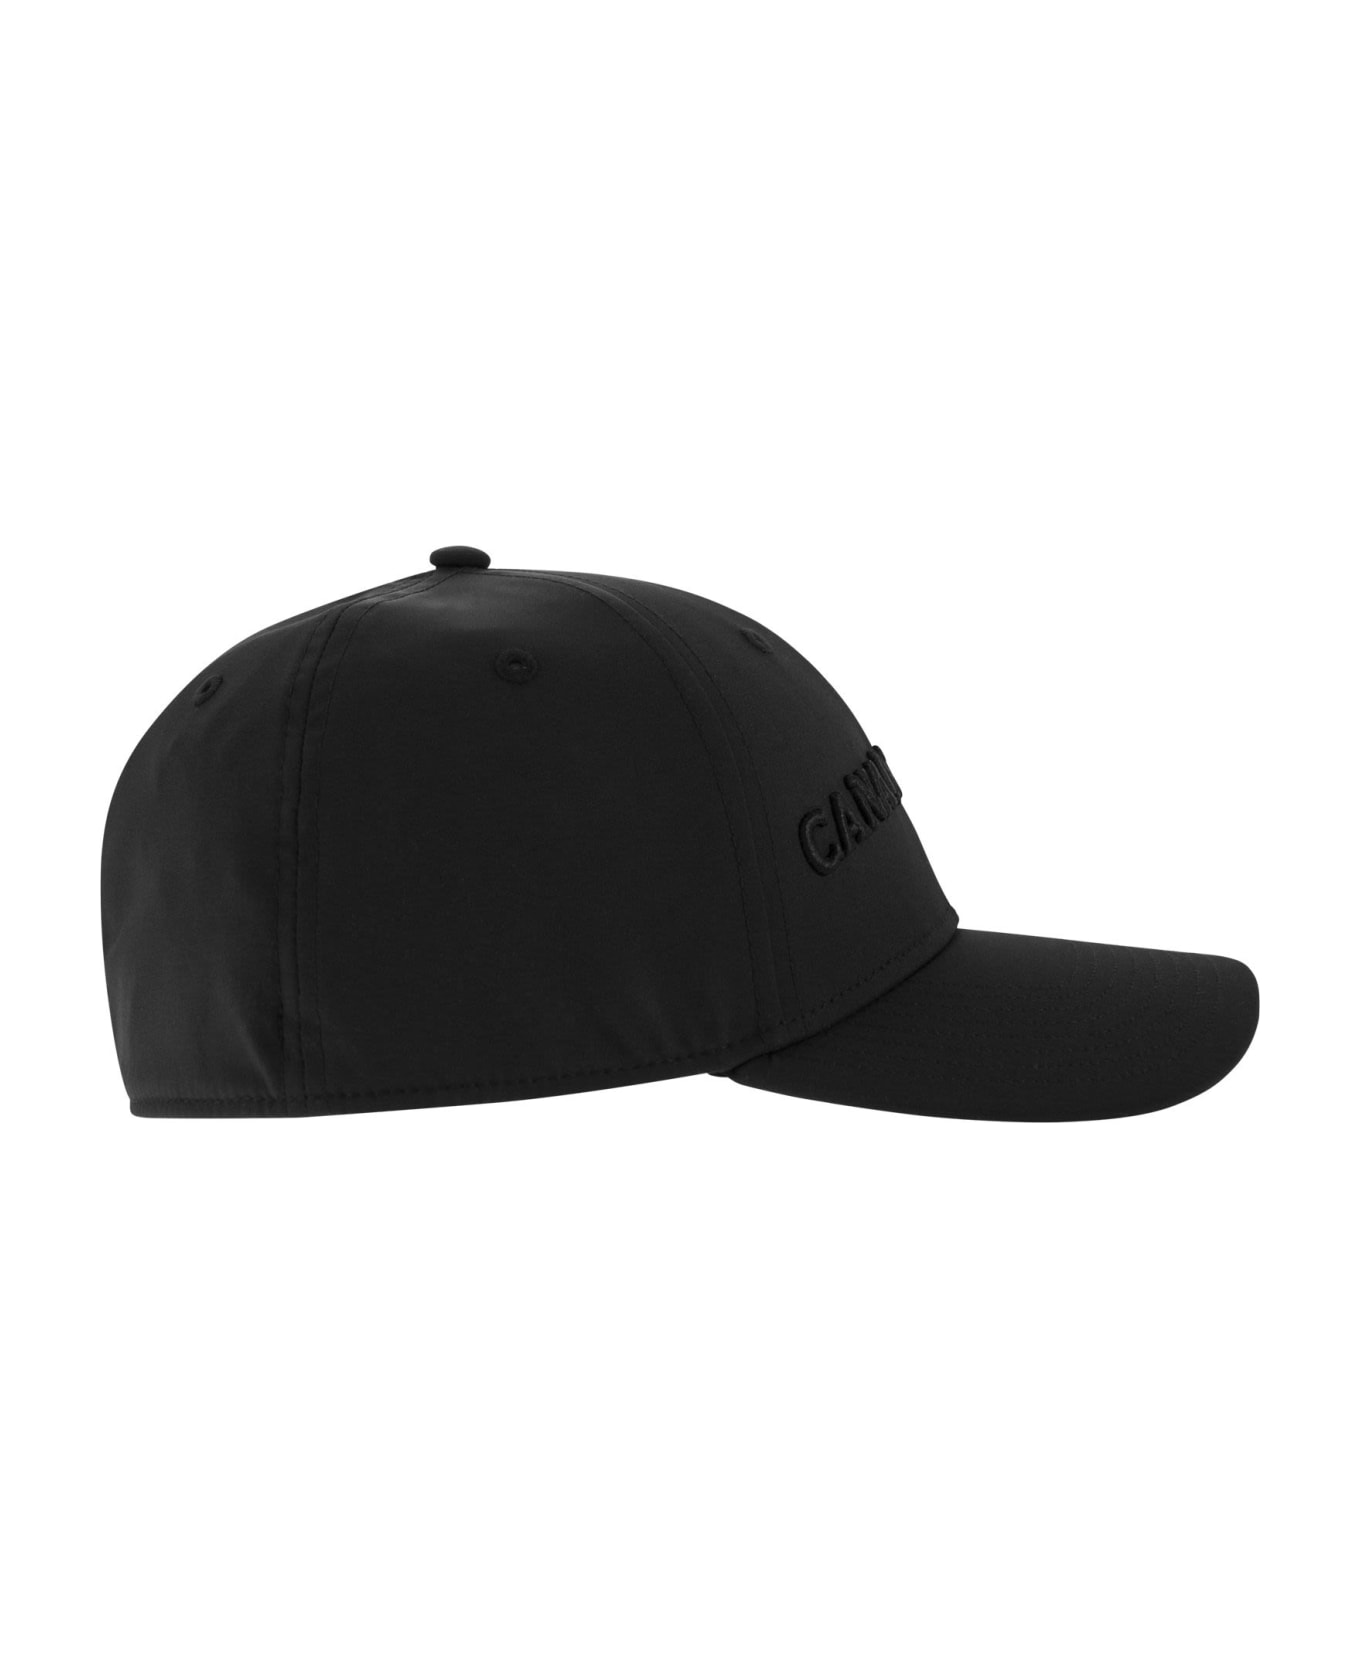 Canada Goose Tech Baseball Cap - Black 帽子